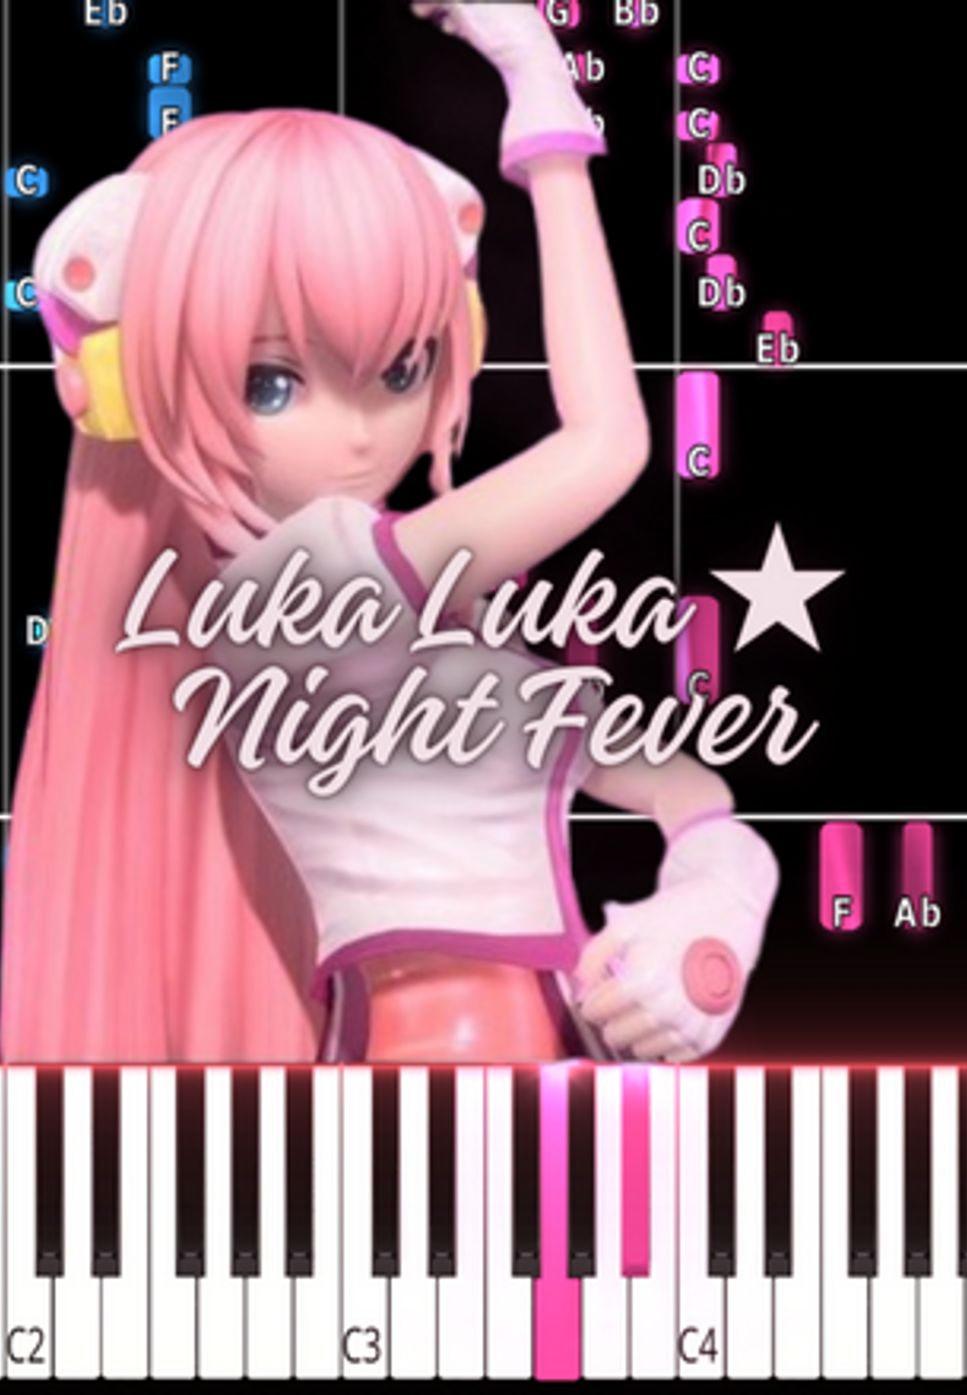 samfree - Luka Luka ★ Night Fever by Marco D.